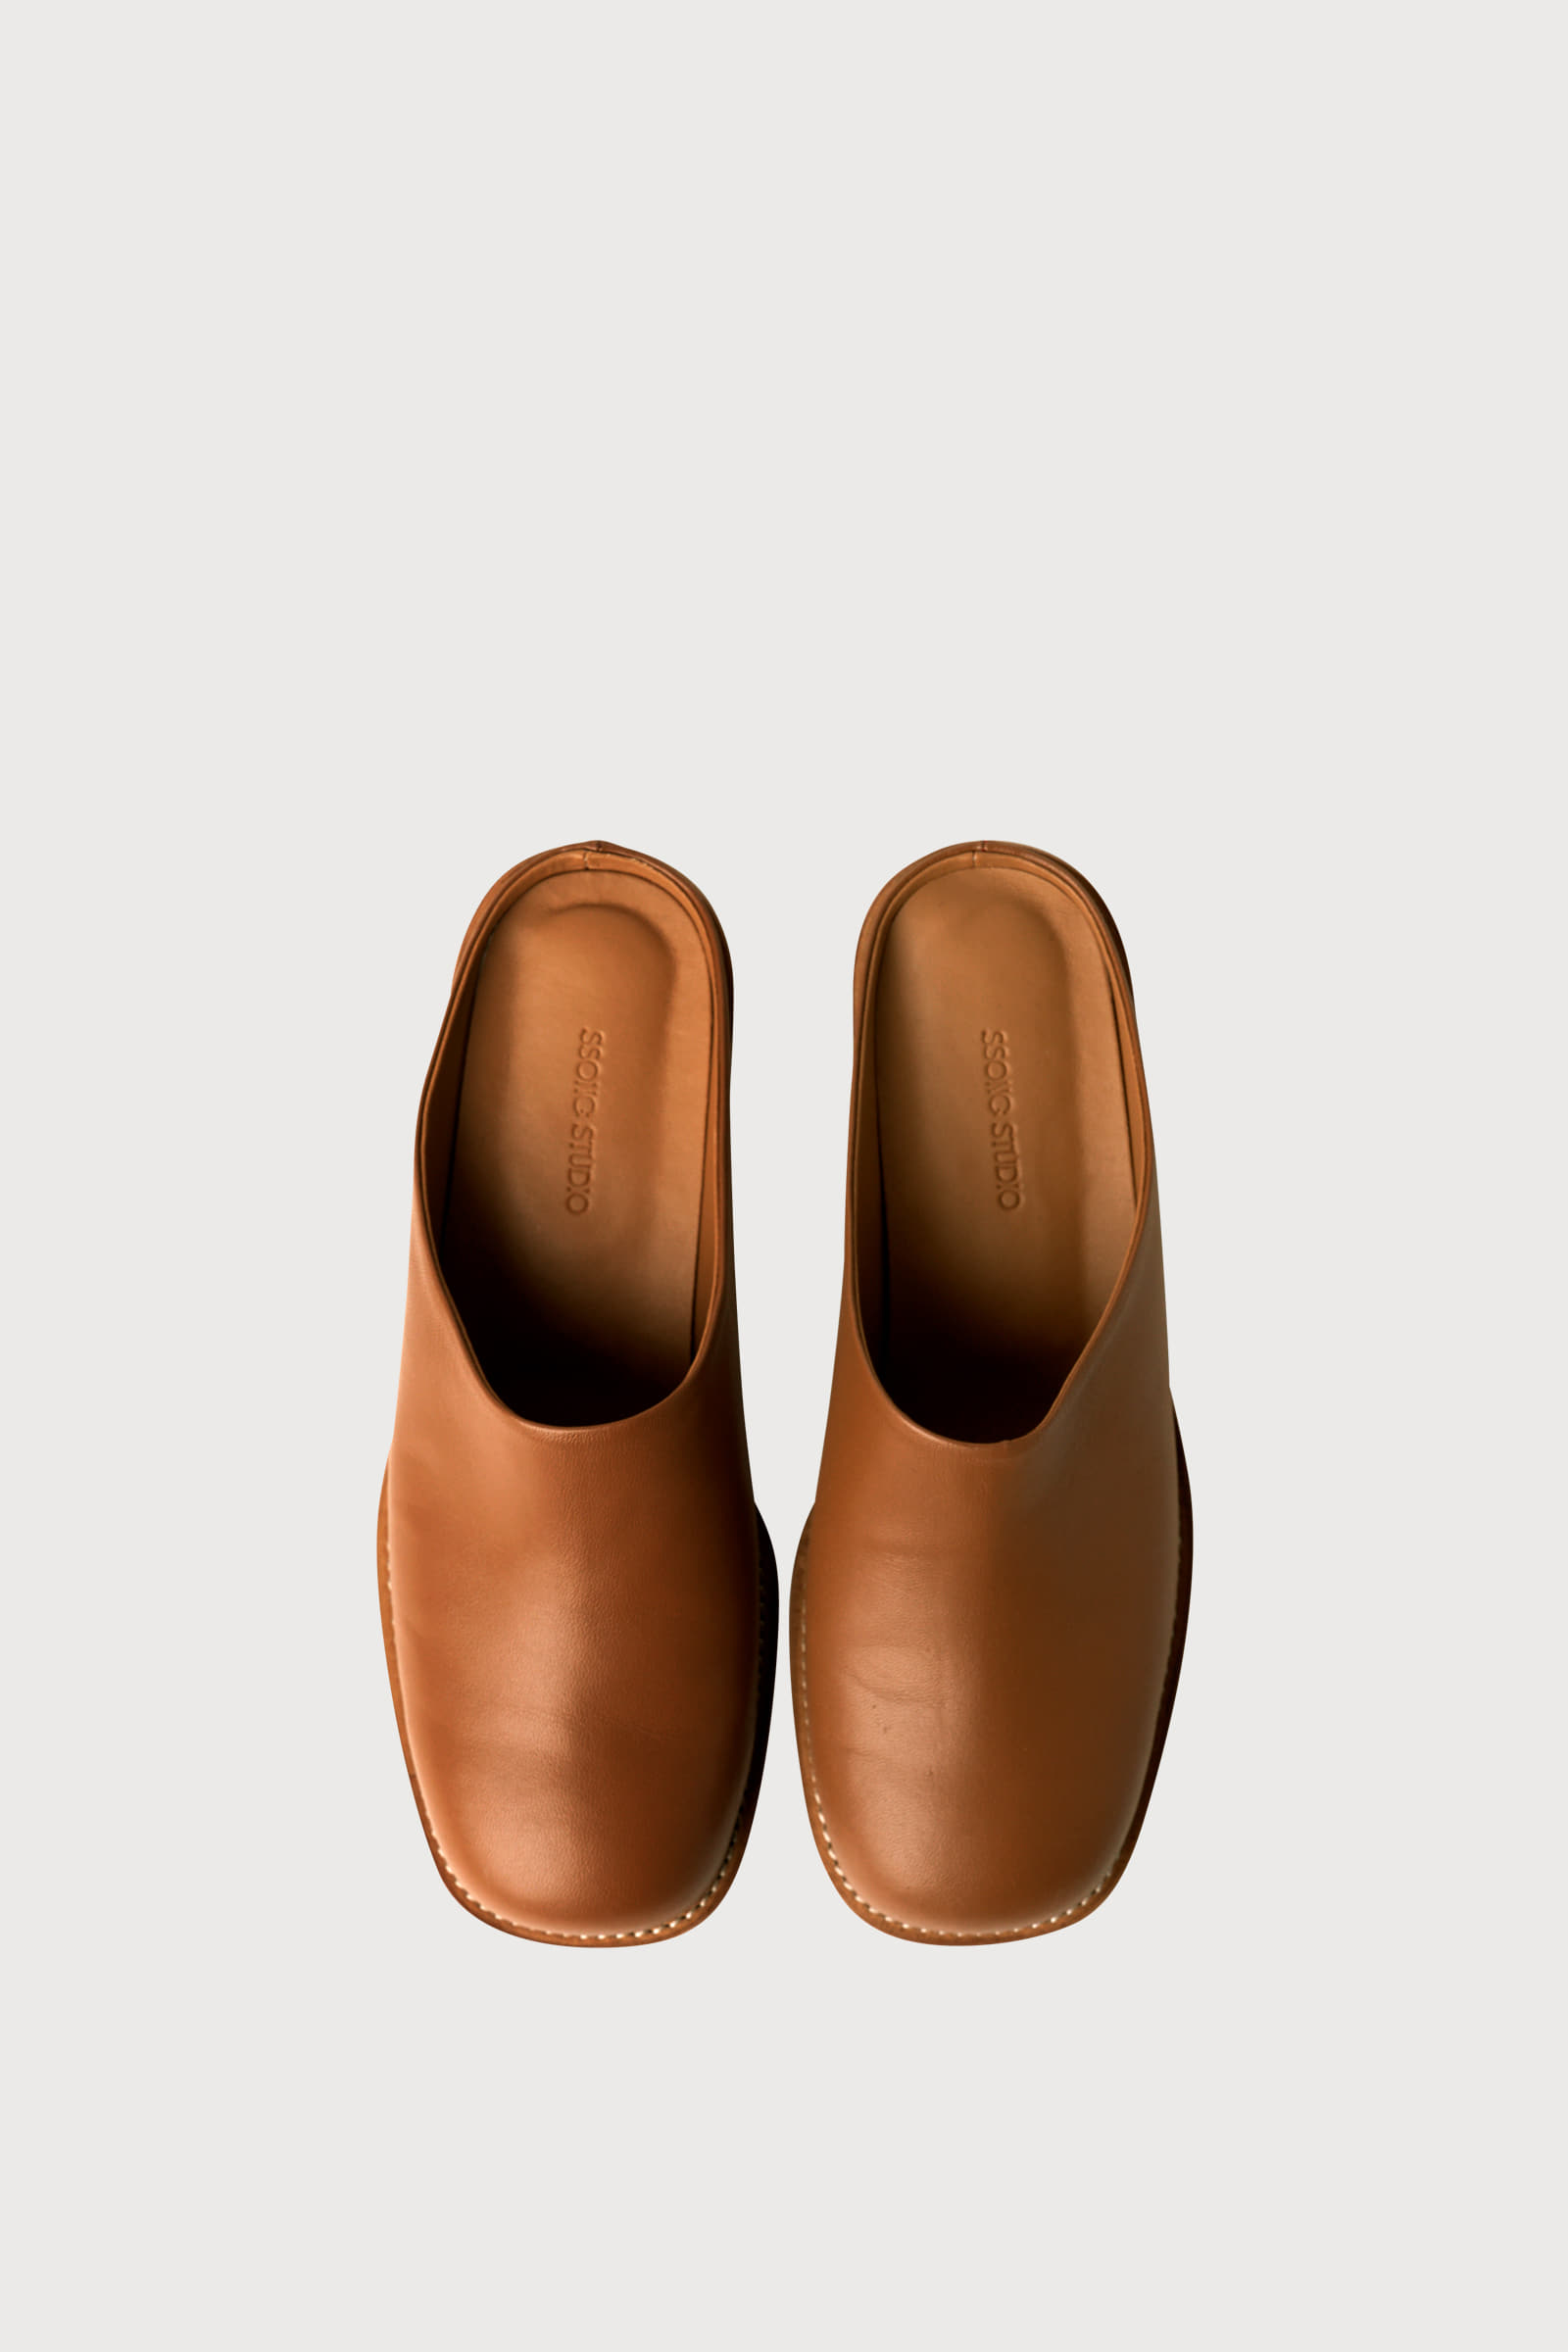 Part.5 Brown mule slippers [수제화]